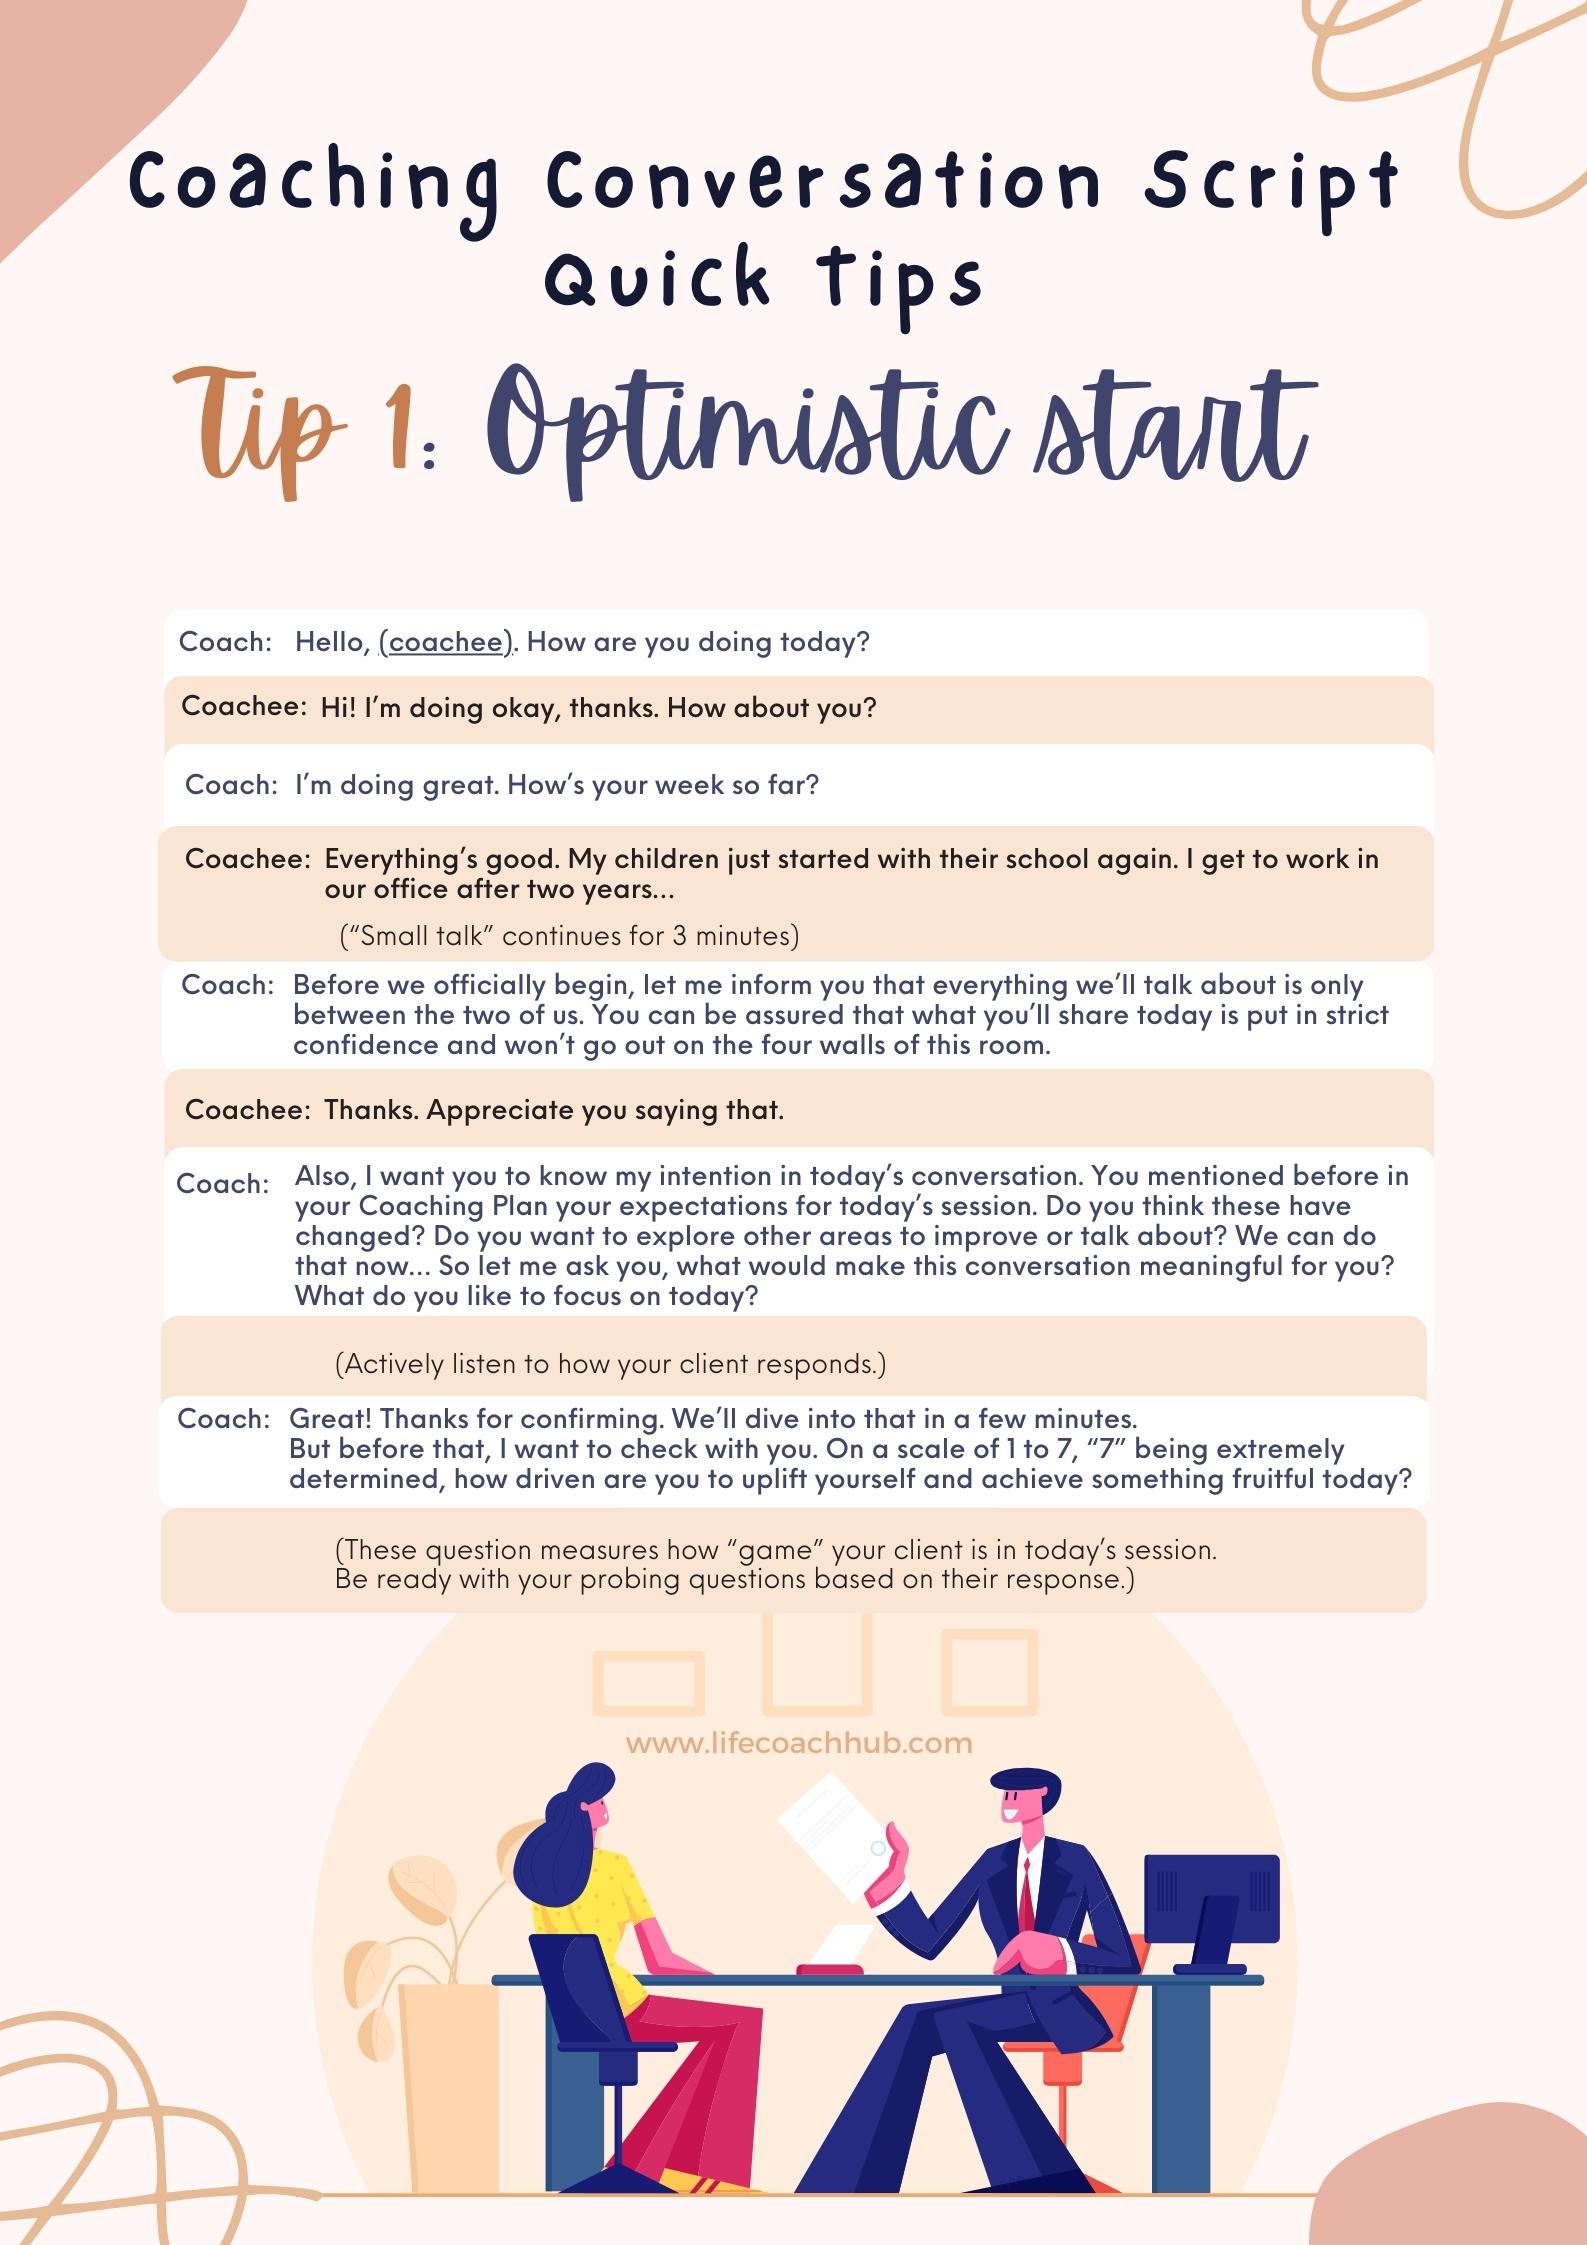 Optimistic start for coaching conversation script tip